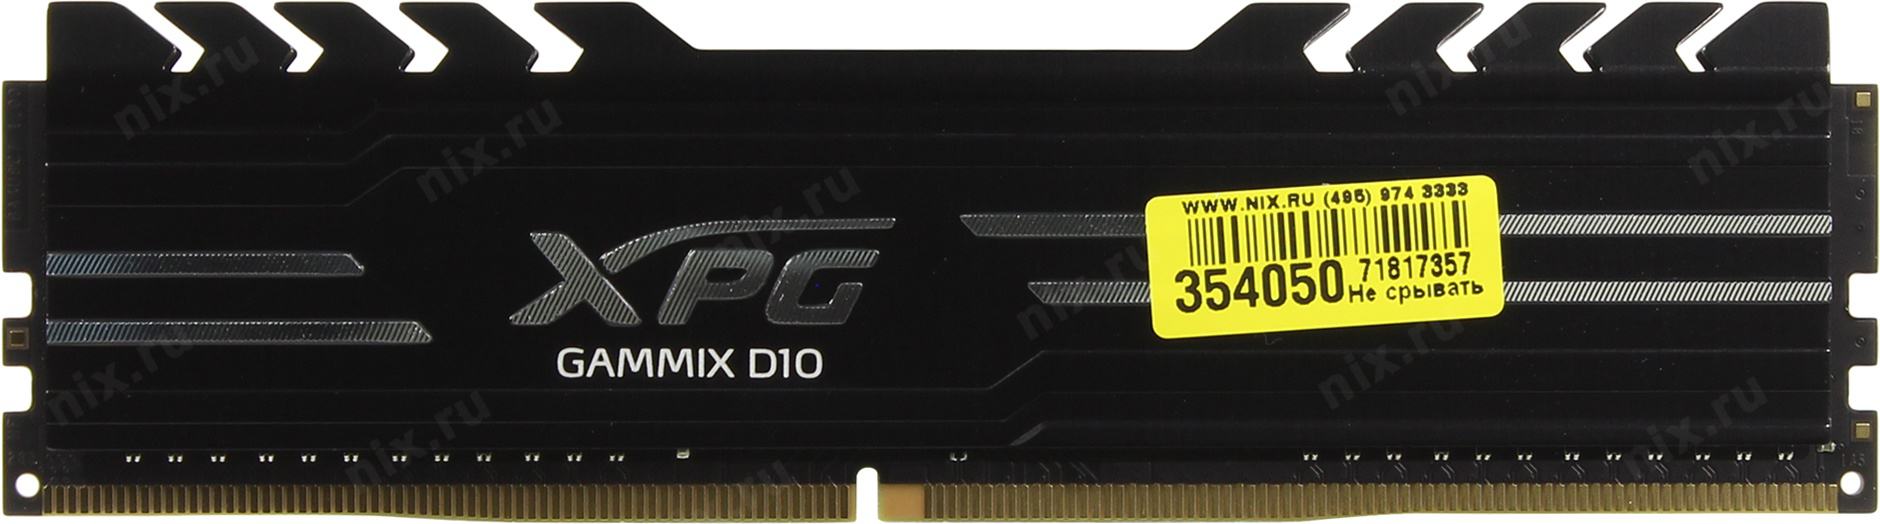 Оперативная память GAMMIX d10 обои. Оперативная память XPG GAMMIX d10 обои egjrjdrb. DDR-10w-100r. Оперативная память adata d10